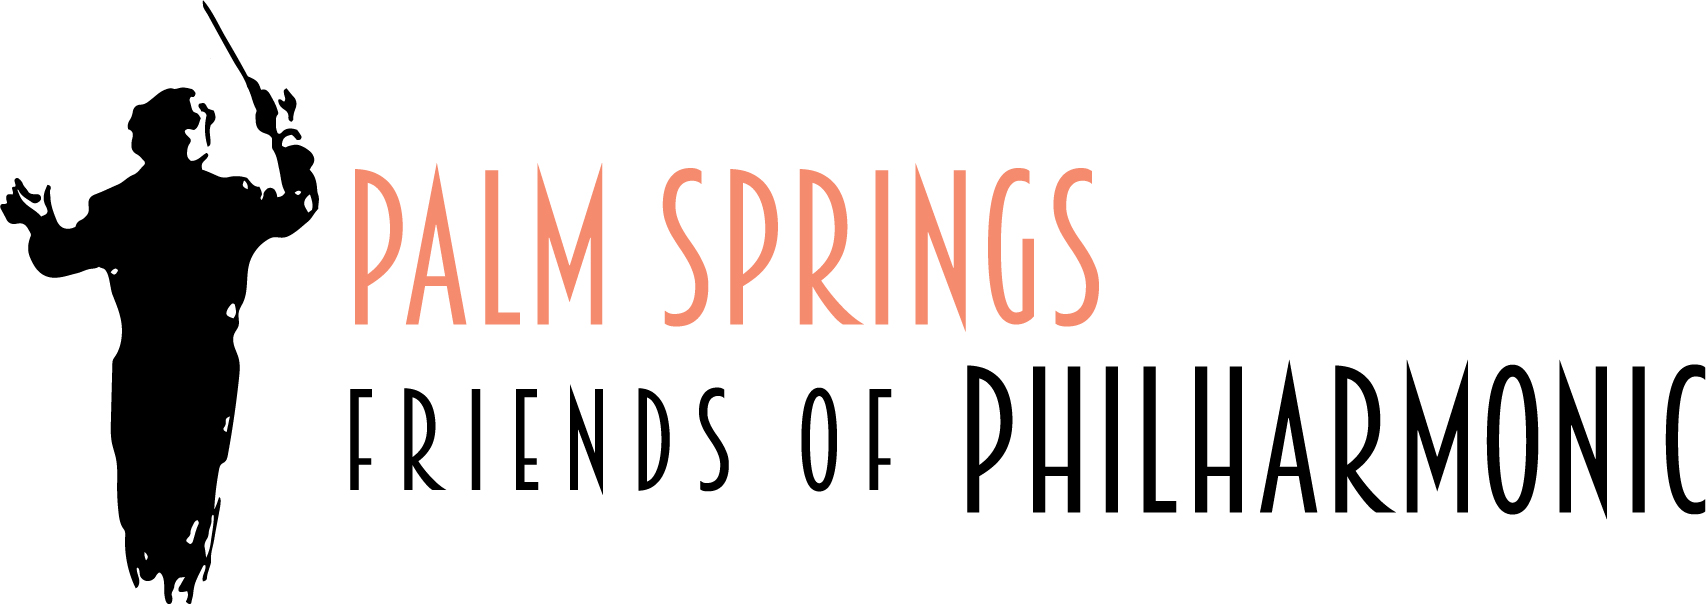 Palm Springs Friends of Philharmonic logo